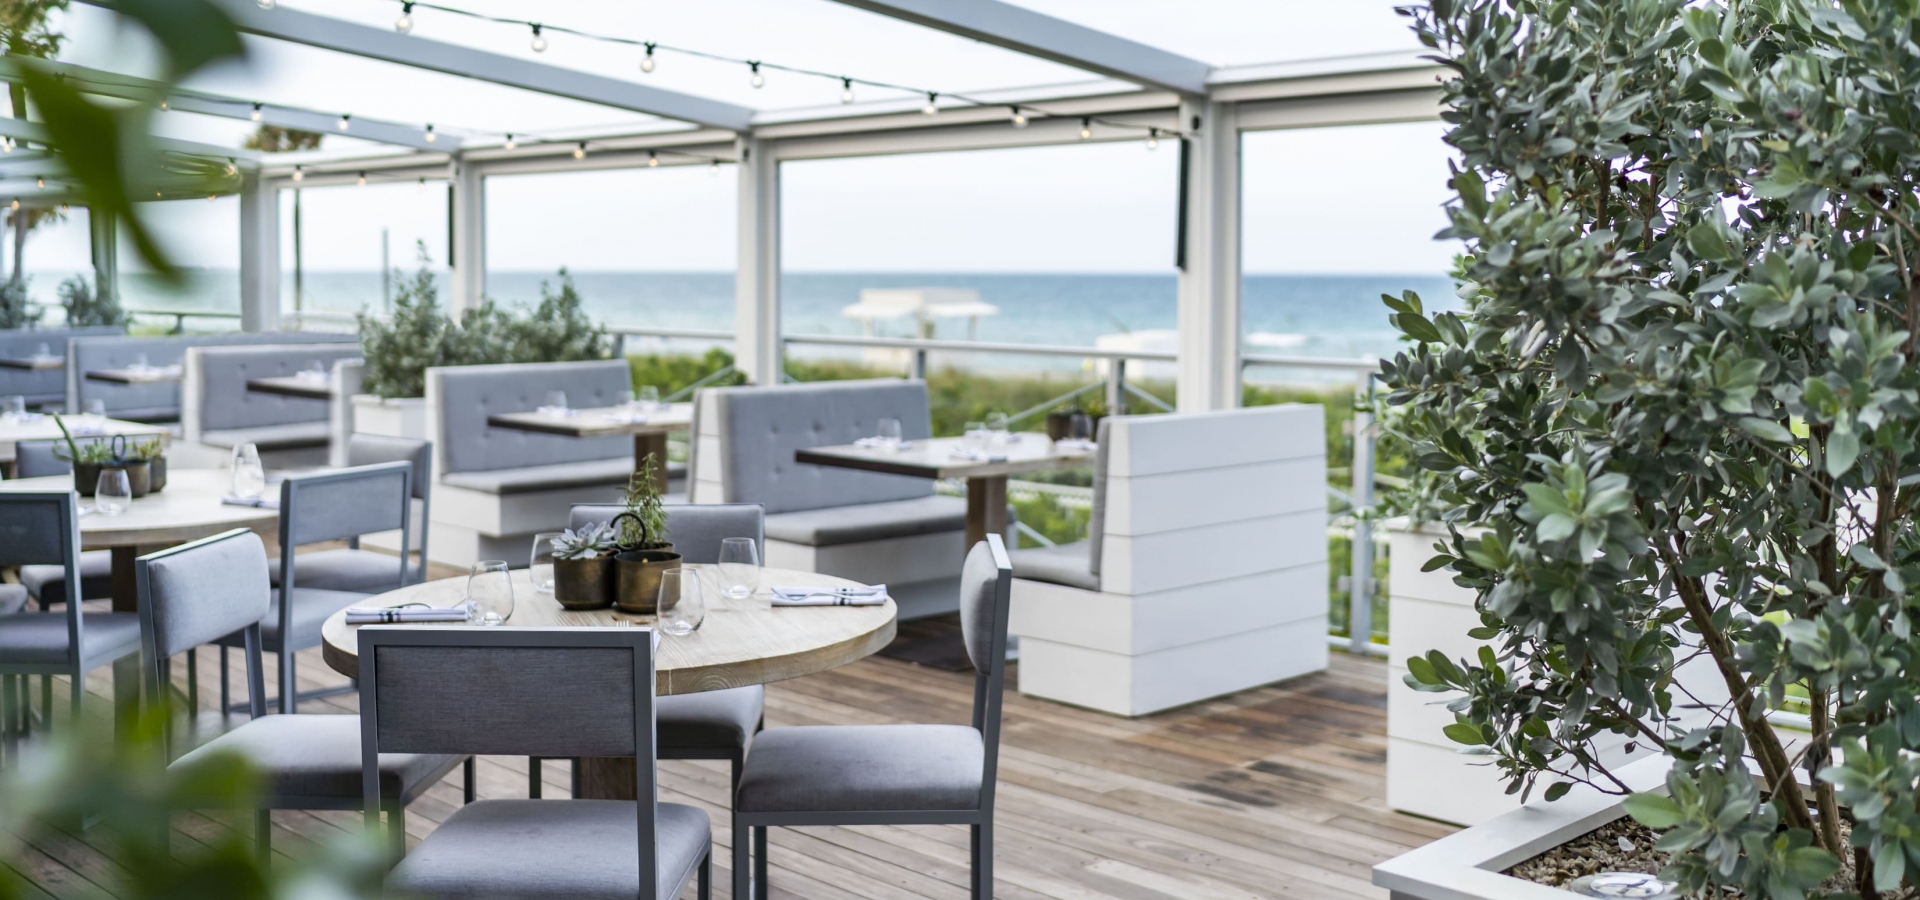 Restaurant Balcony with ocean view